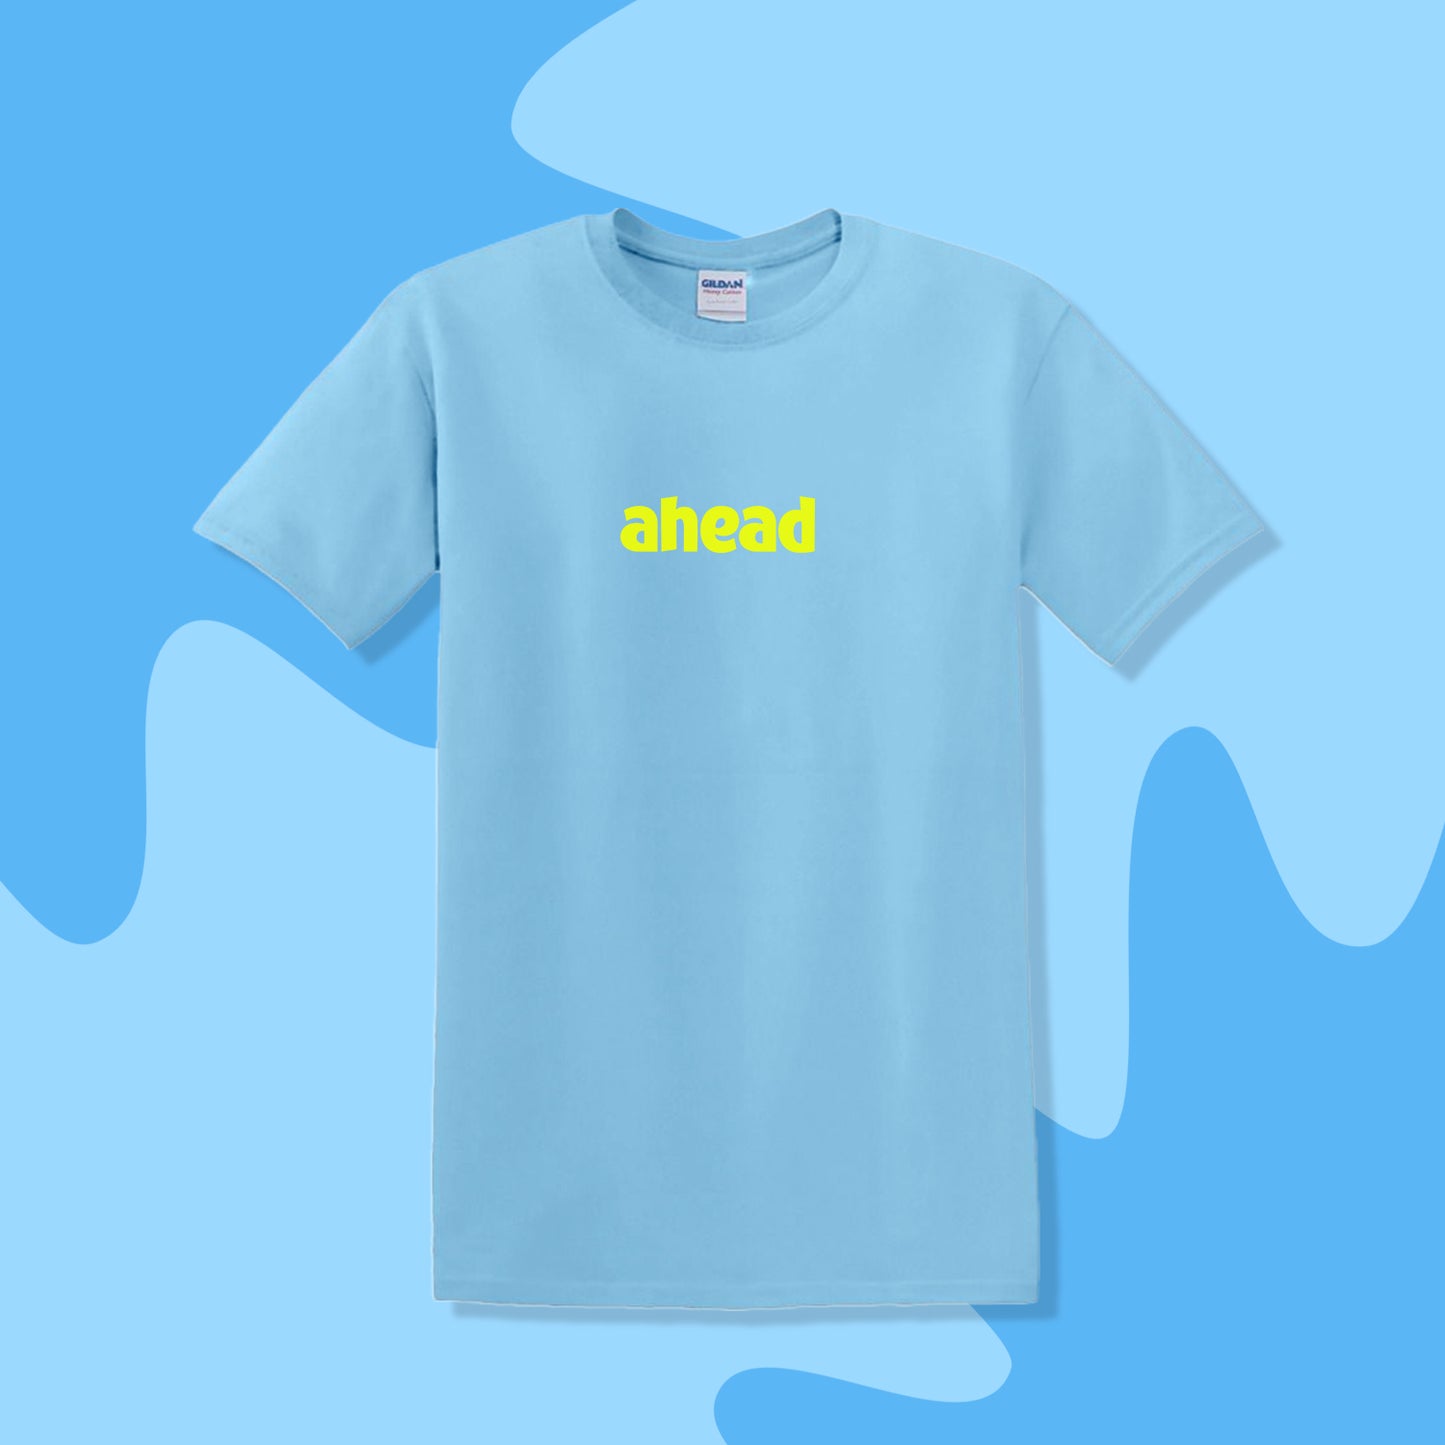 ahead Camiseta (unisex)